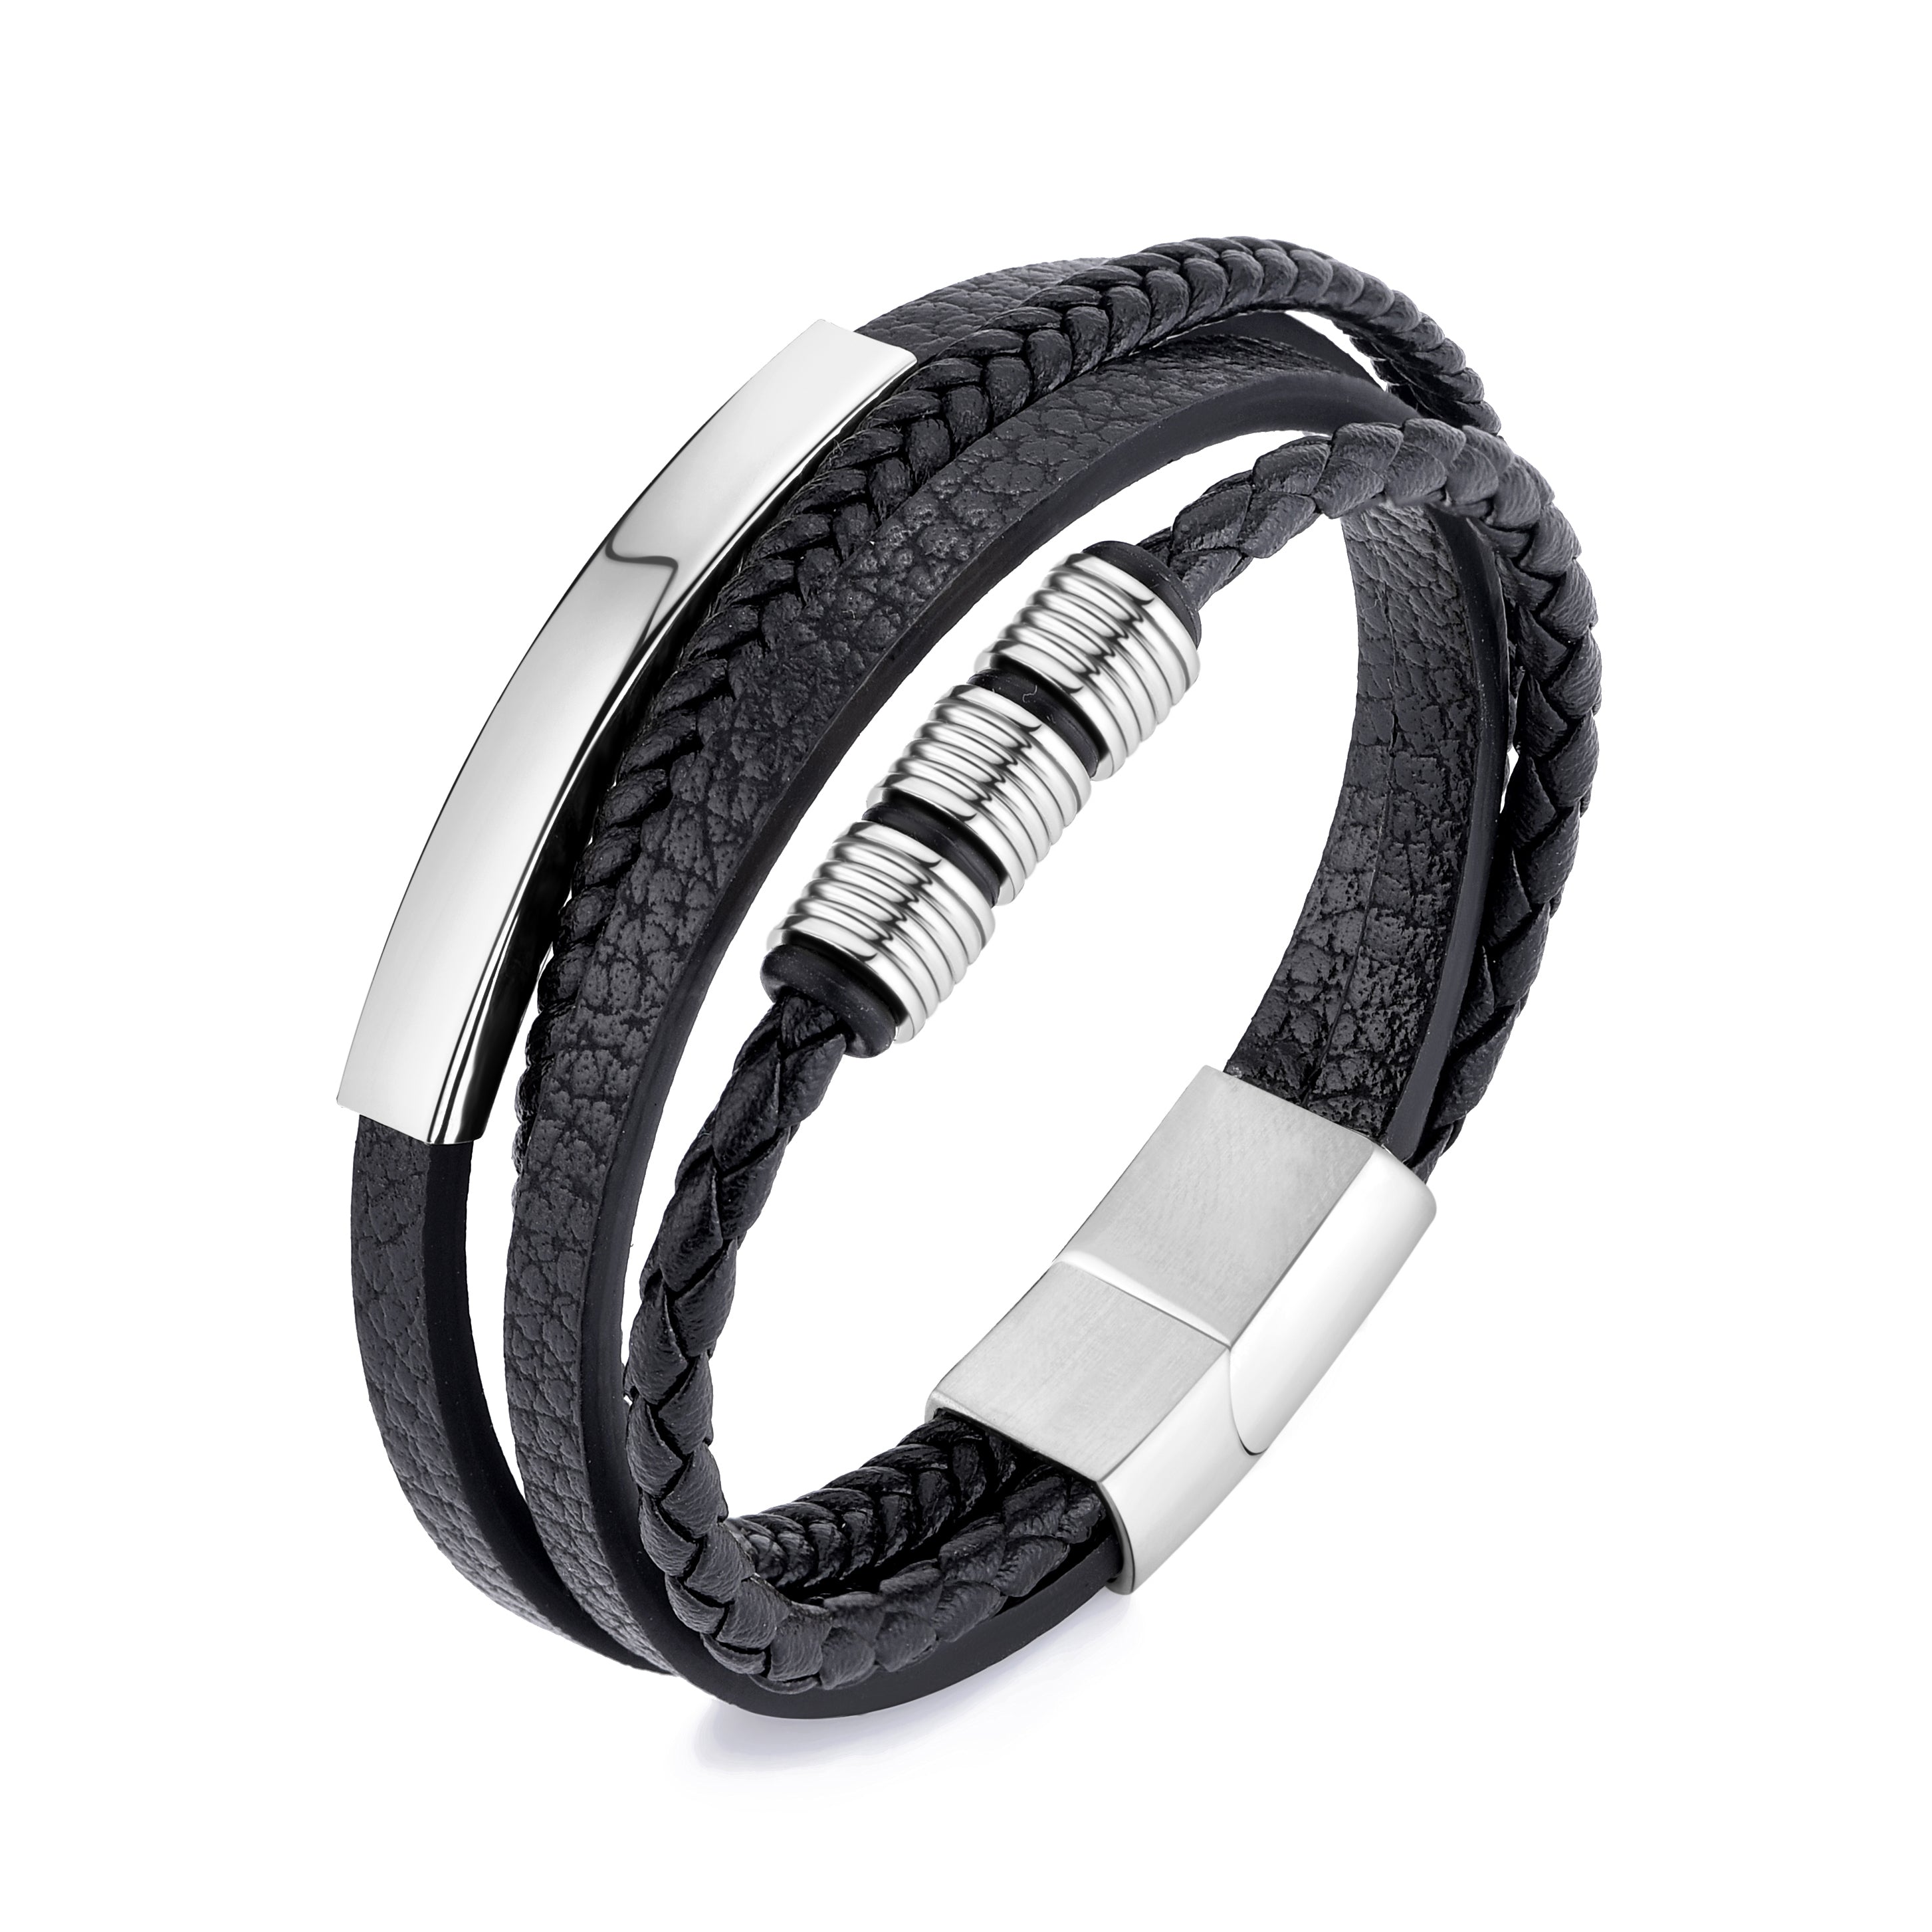 Men's Steel Genuine Black Leather Double Braided Bracelet by Philip Jones Jewellery